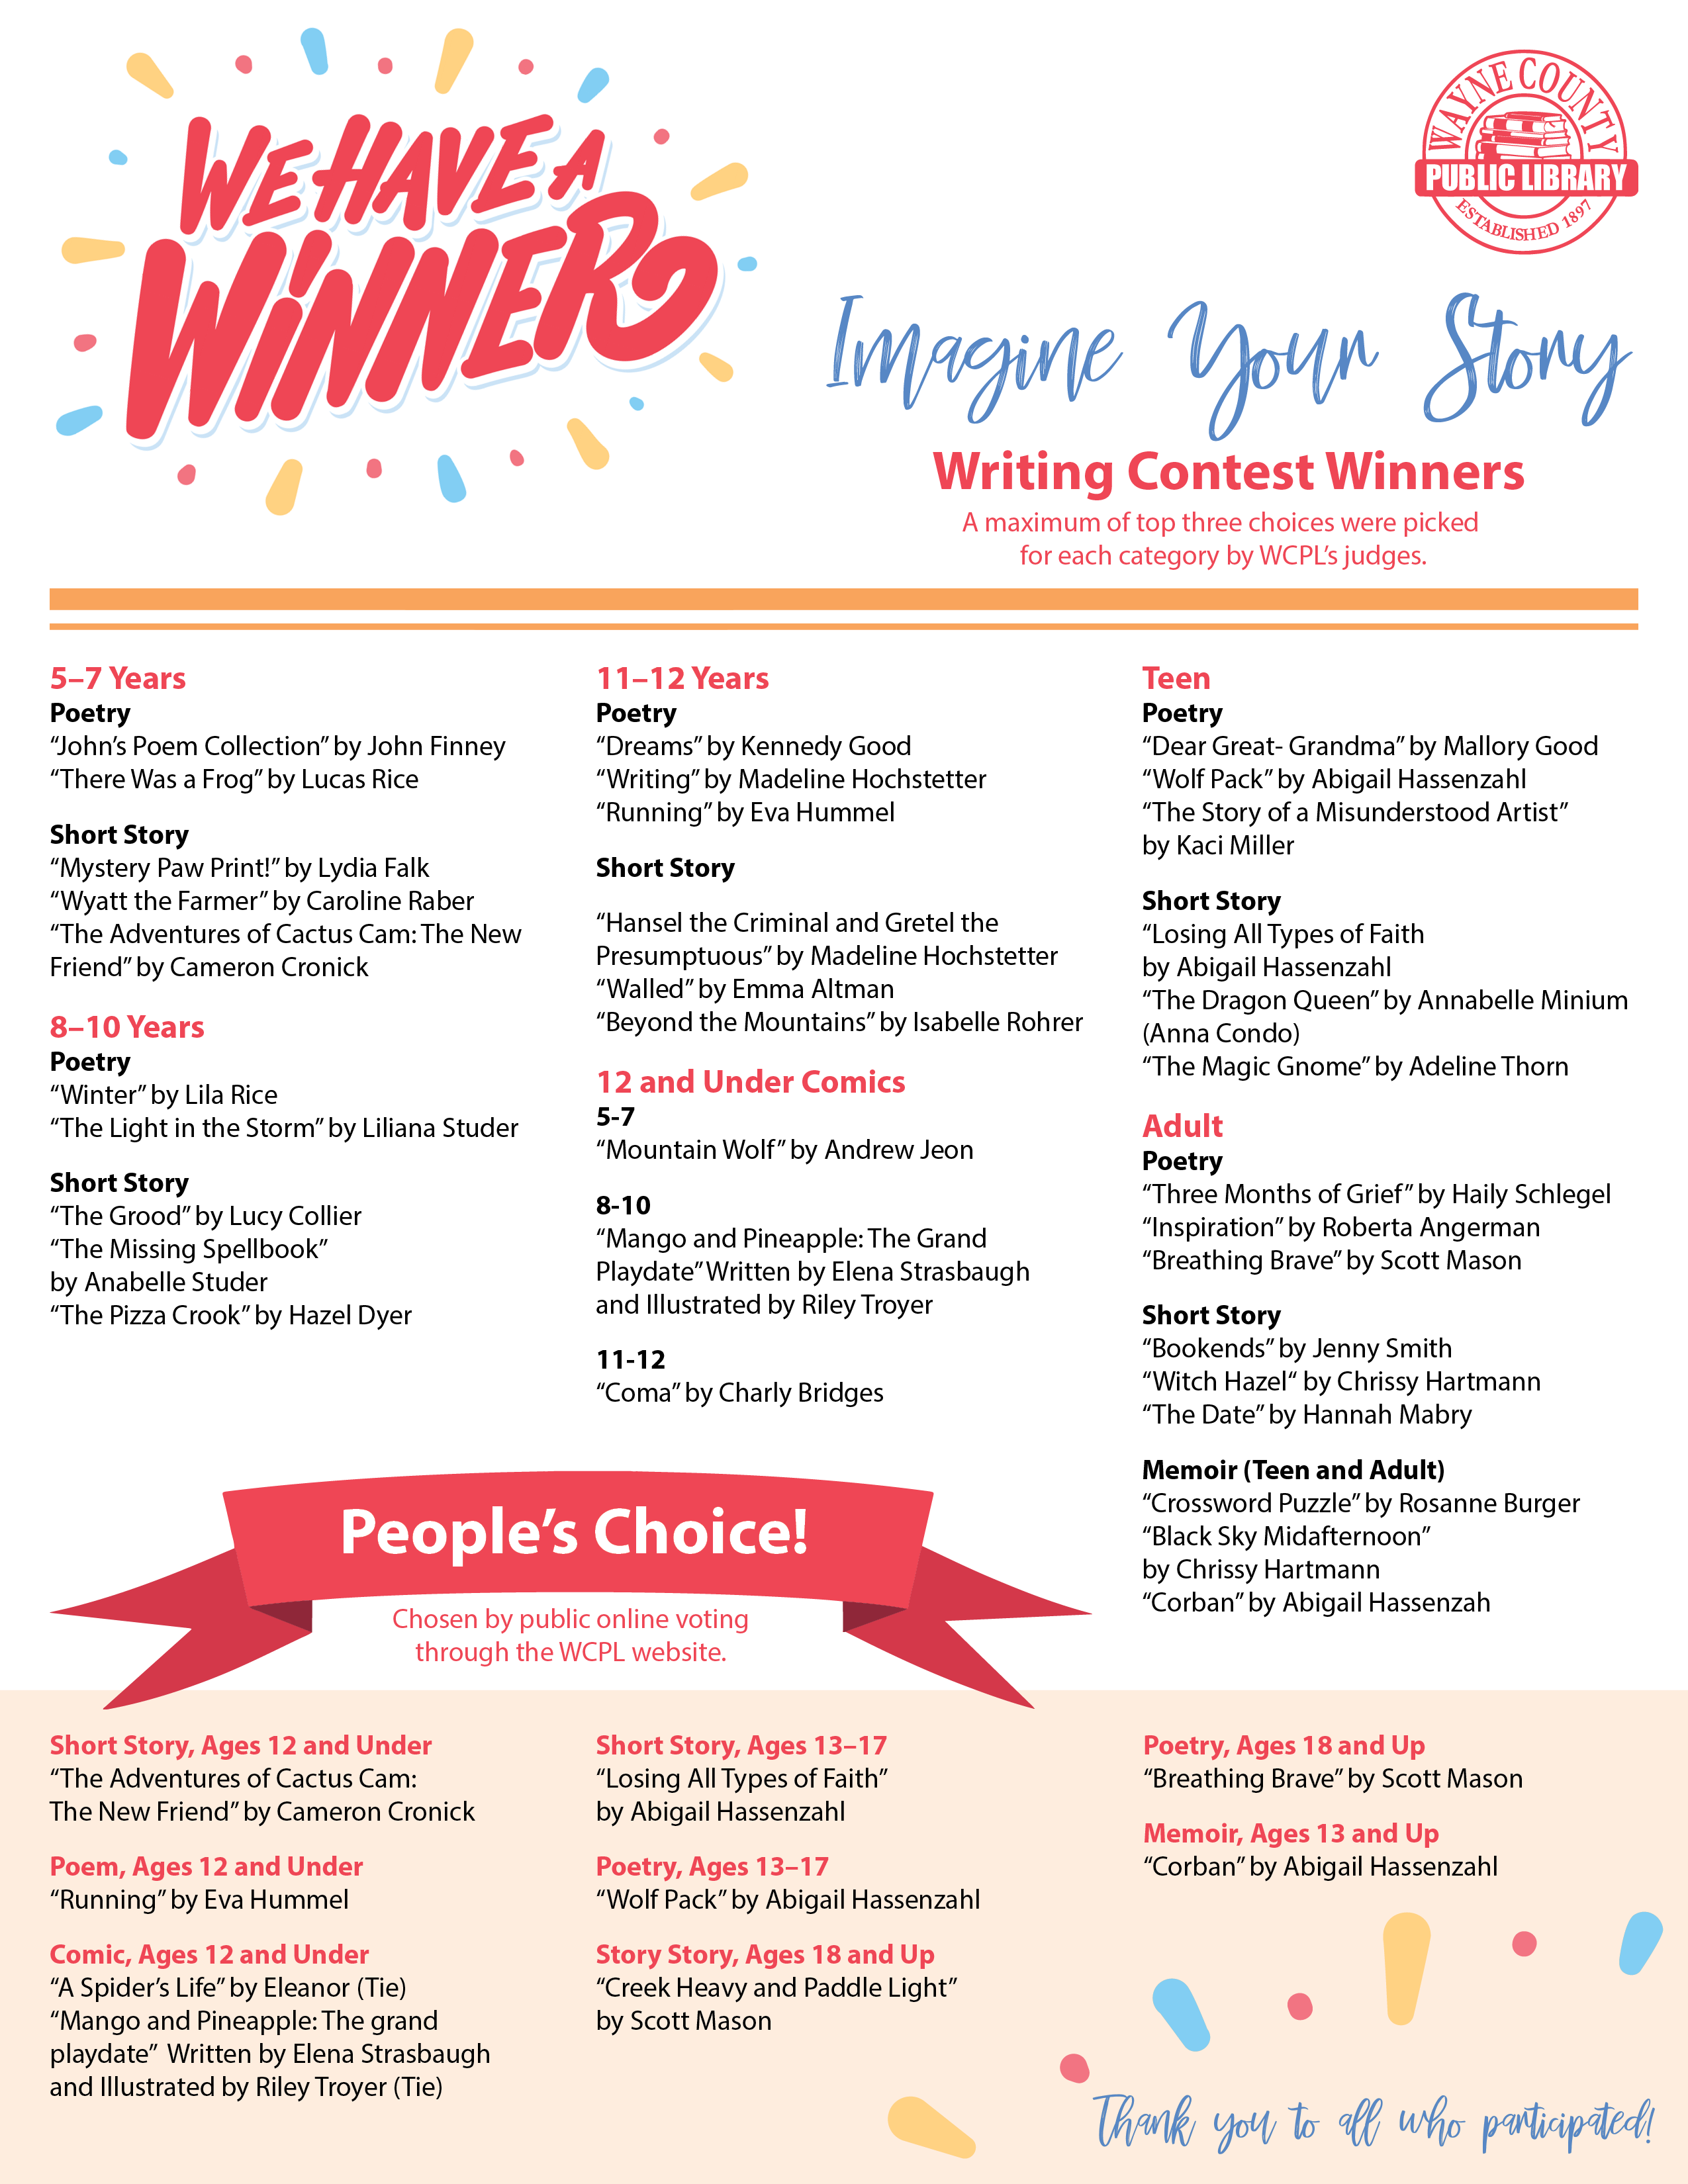 Writing Contest Winners